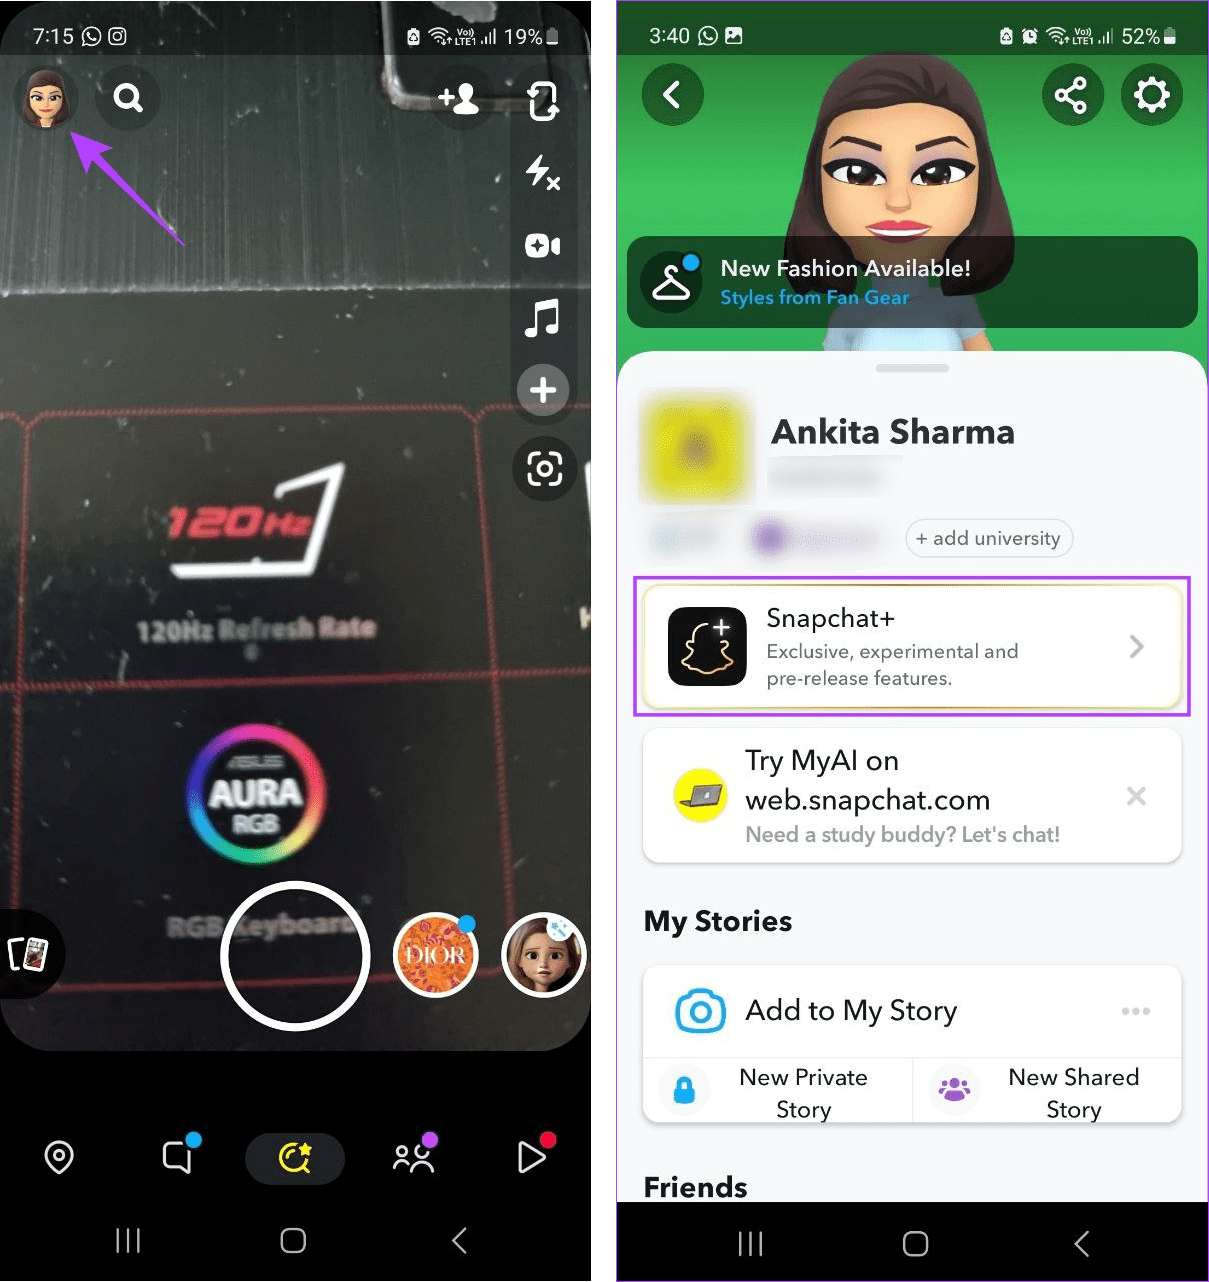 Snapchat My AIが動作しない、またはモバイルアプリで表示されない問題を修正する8つの方法